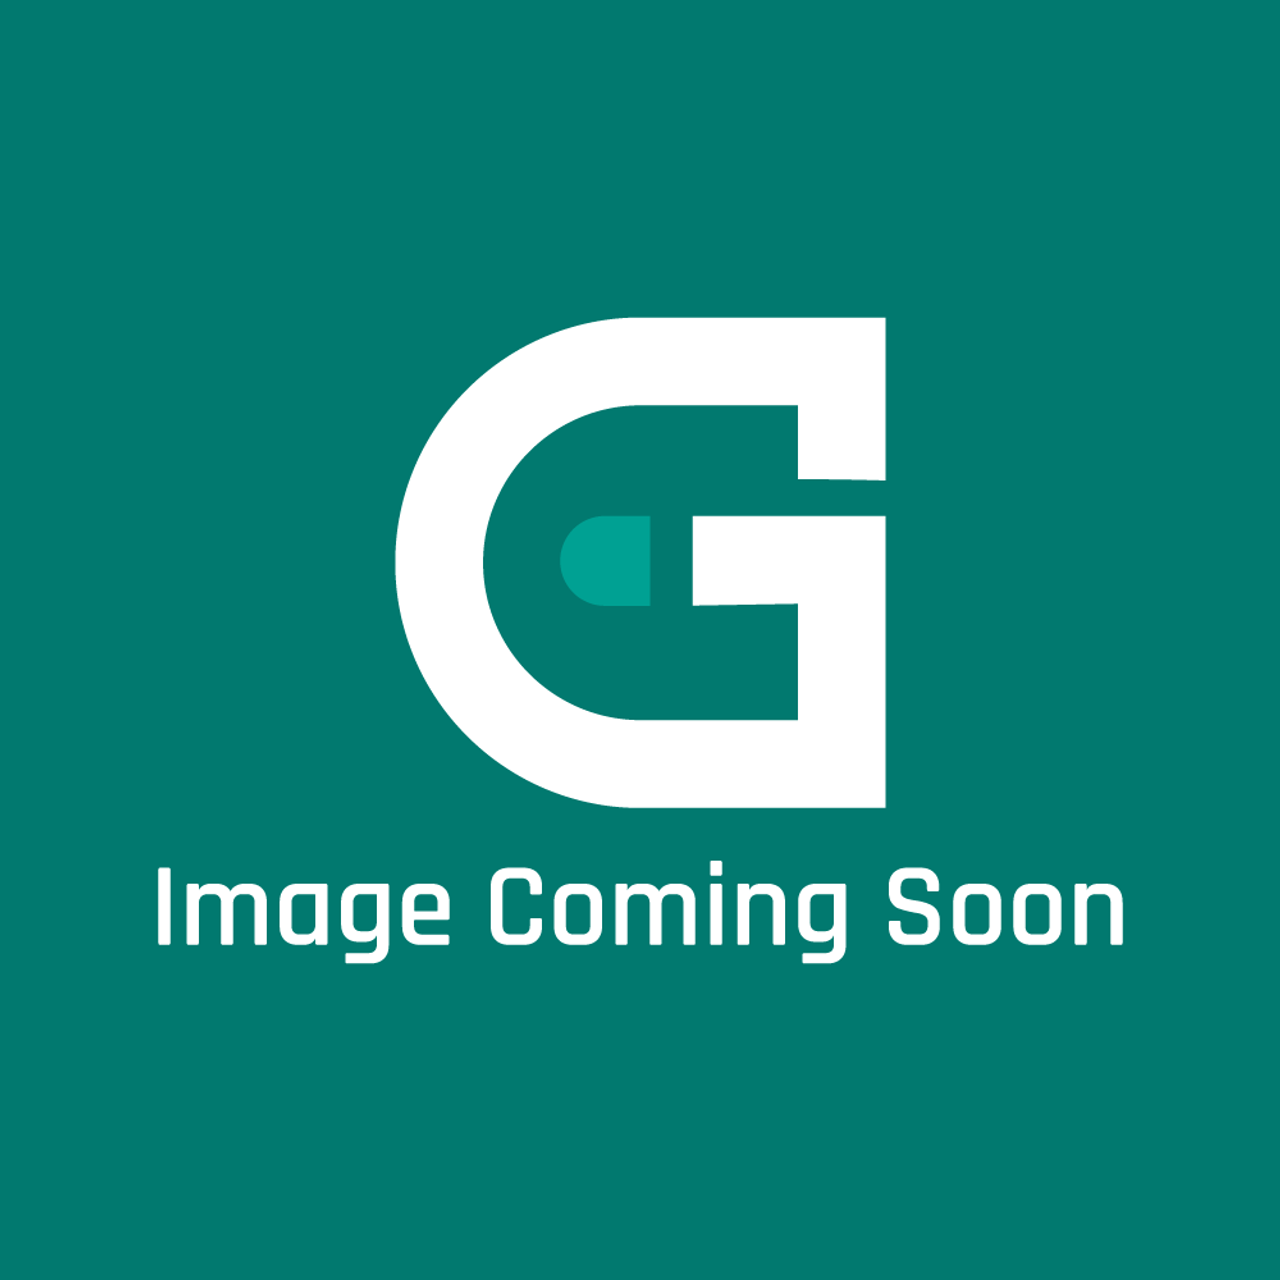 GE Appliances WB28K10575 - CONVERTION KIT ASM - Image Coming Soon!